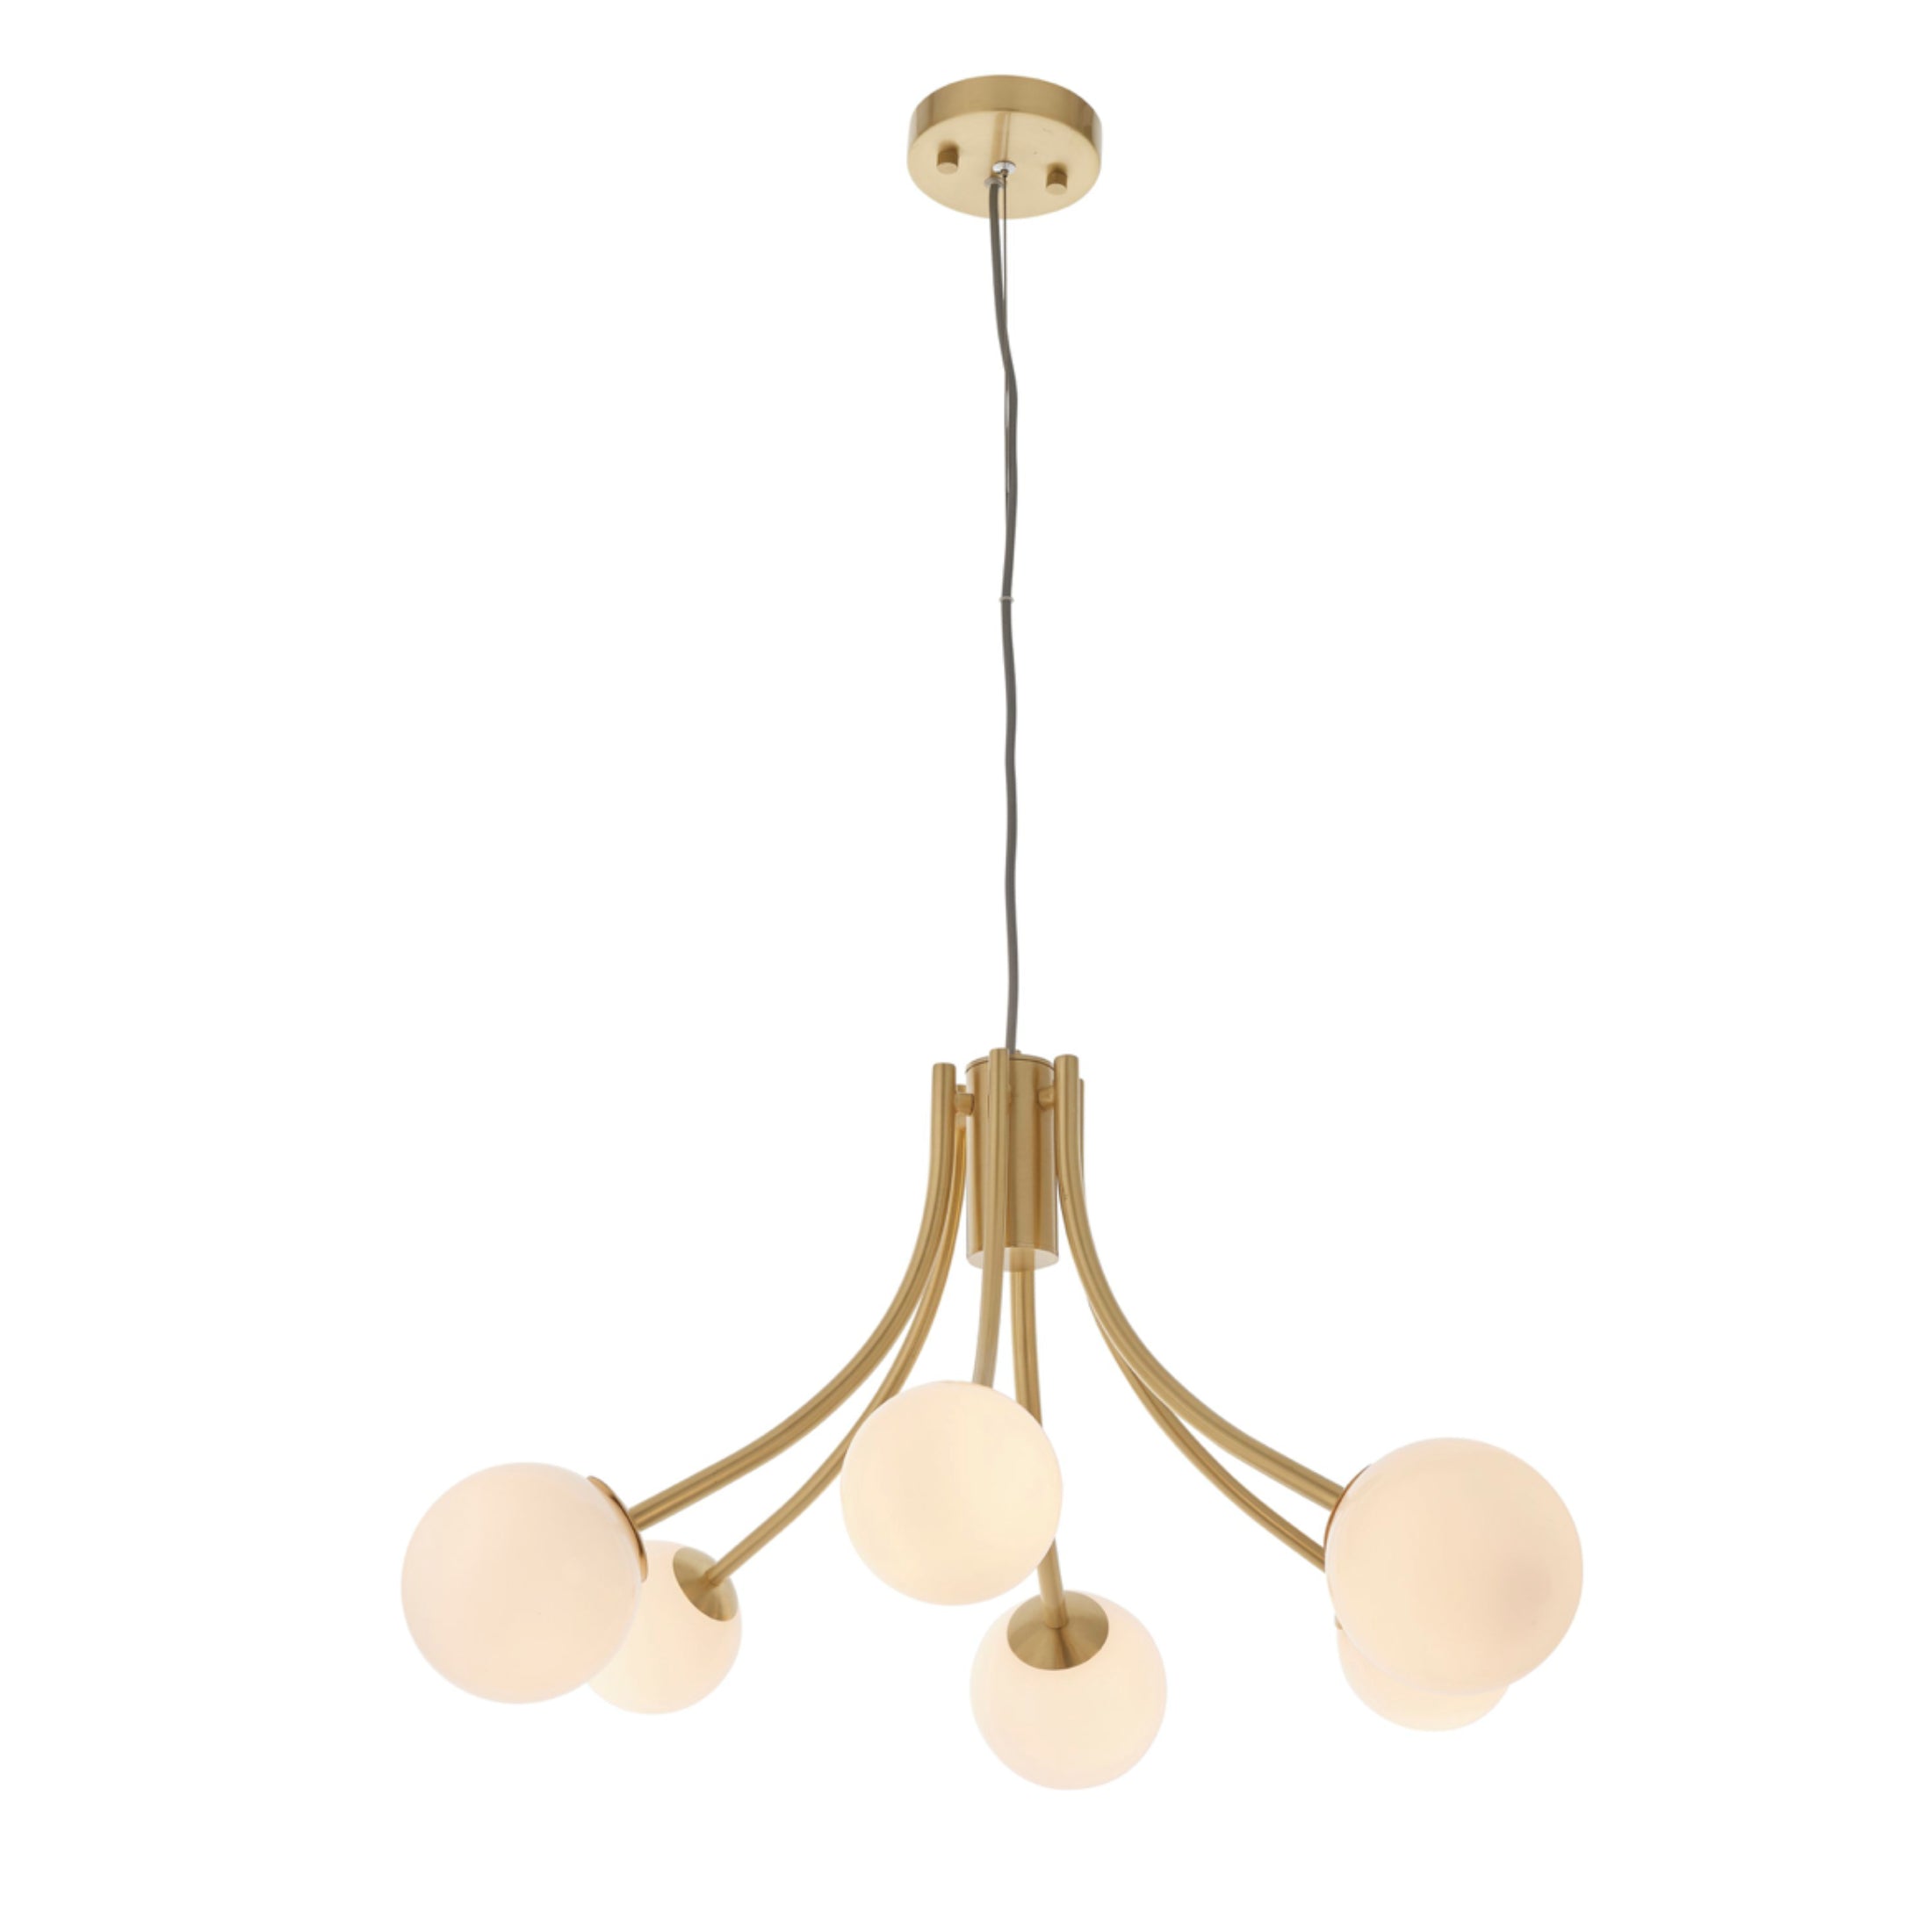 Brushed Brass Art Deco Inspired Six Globe Pendant Light